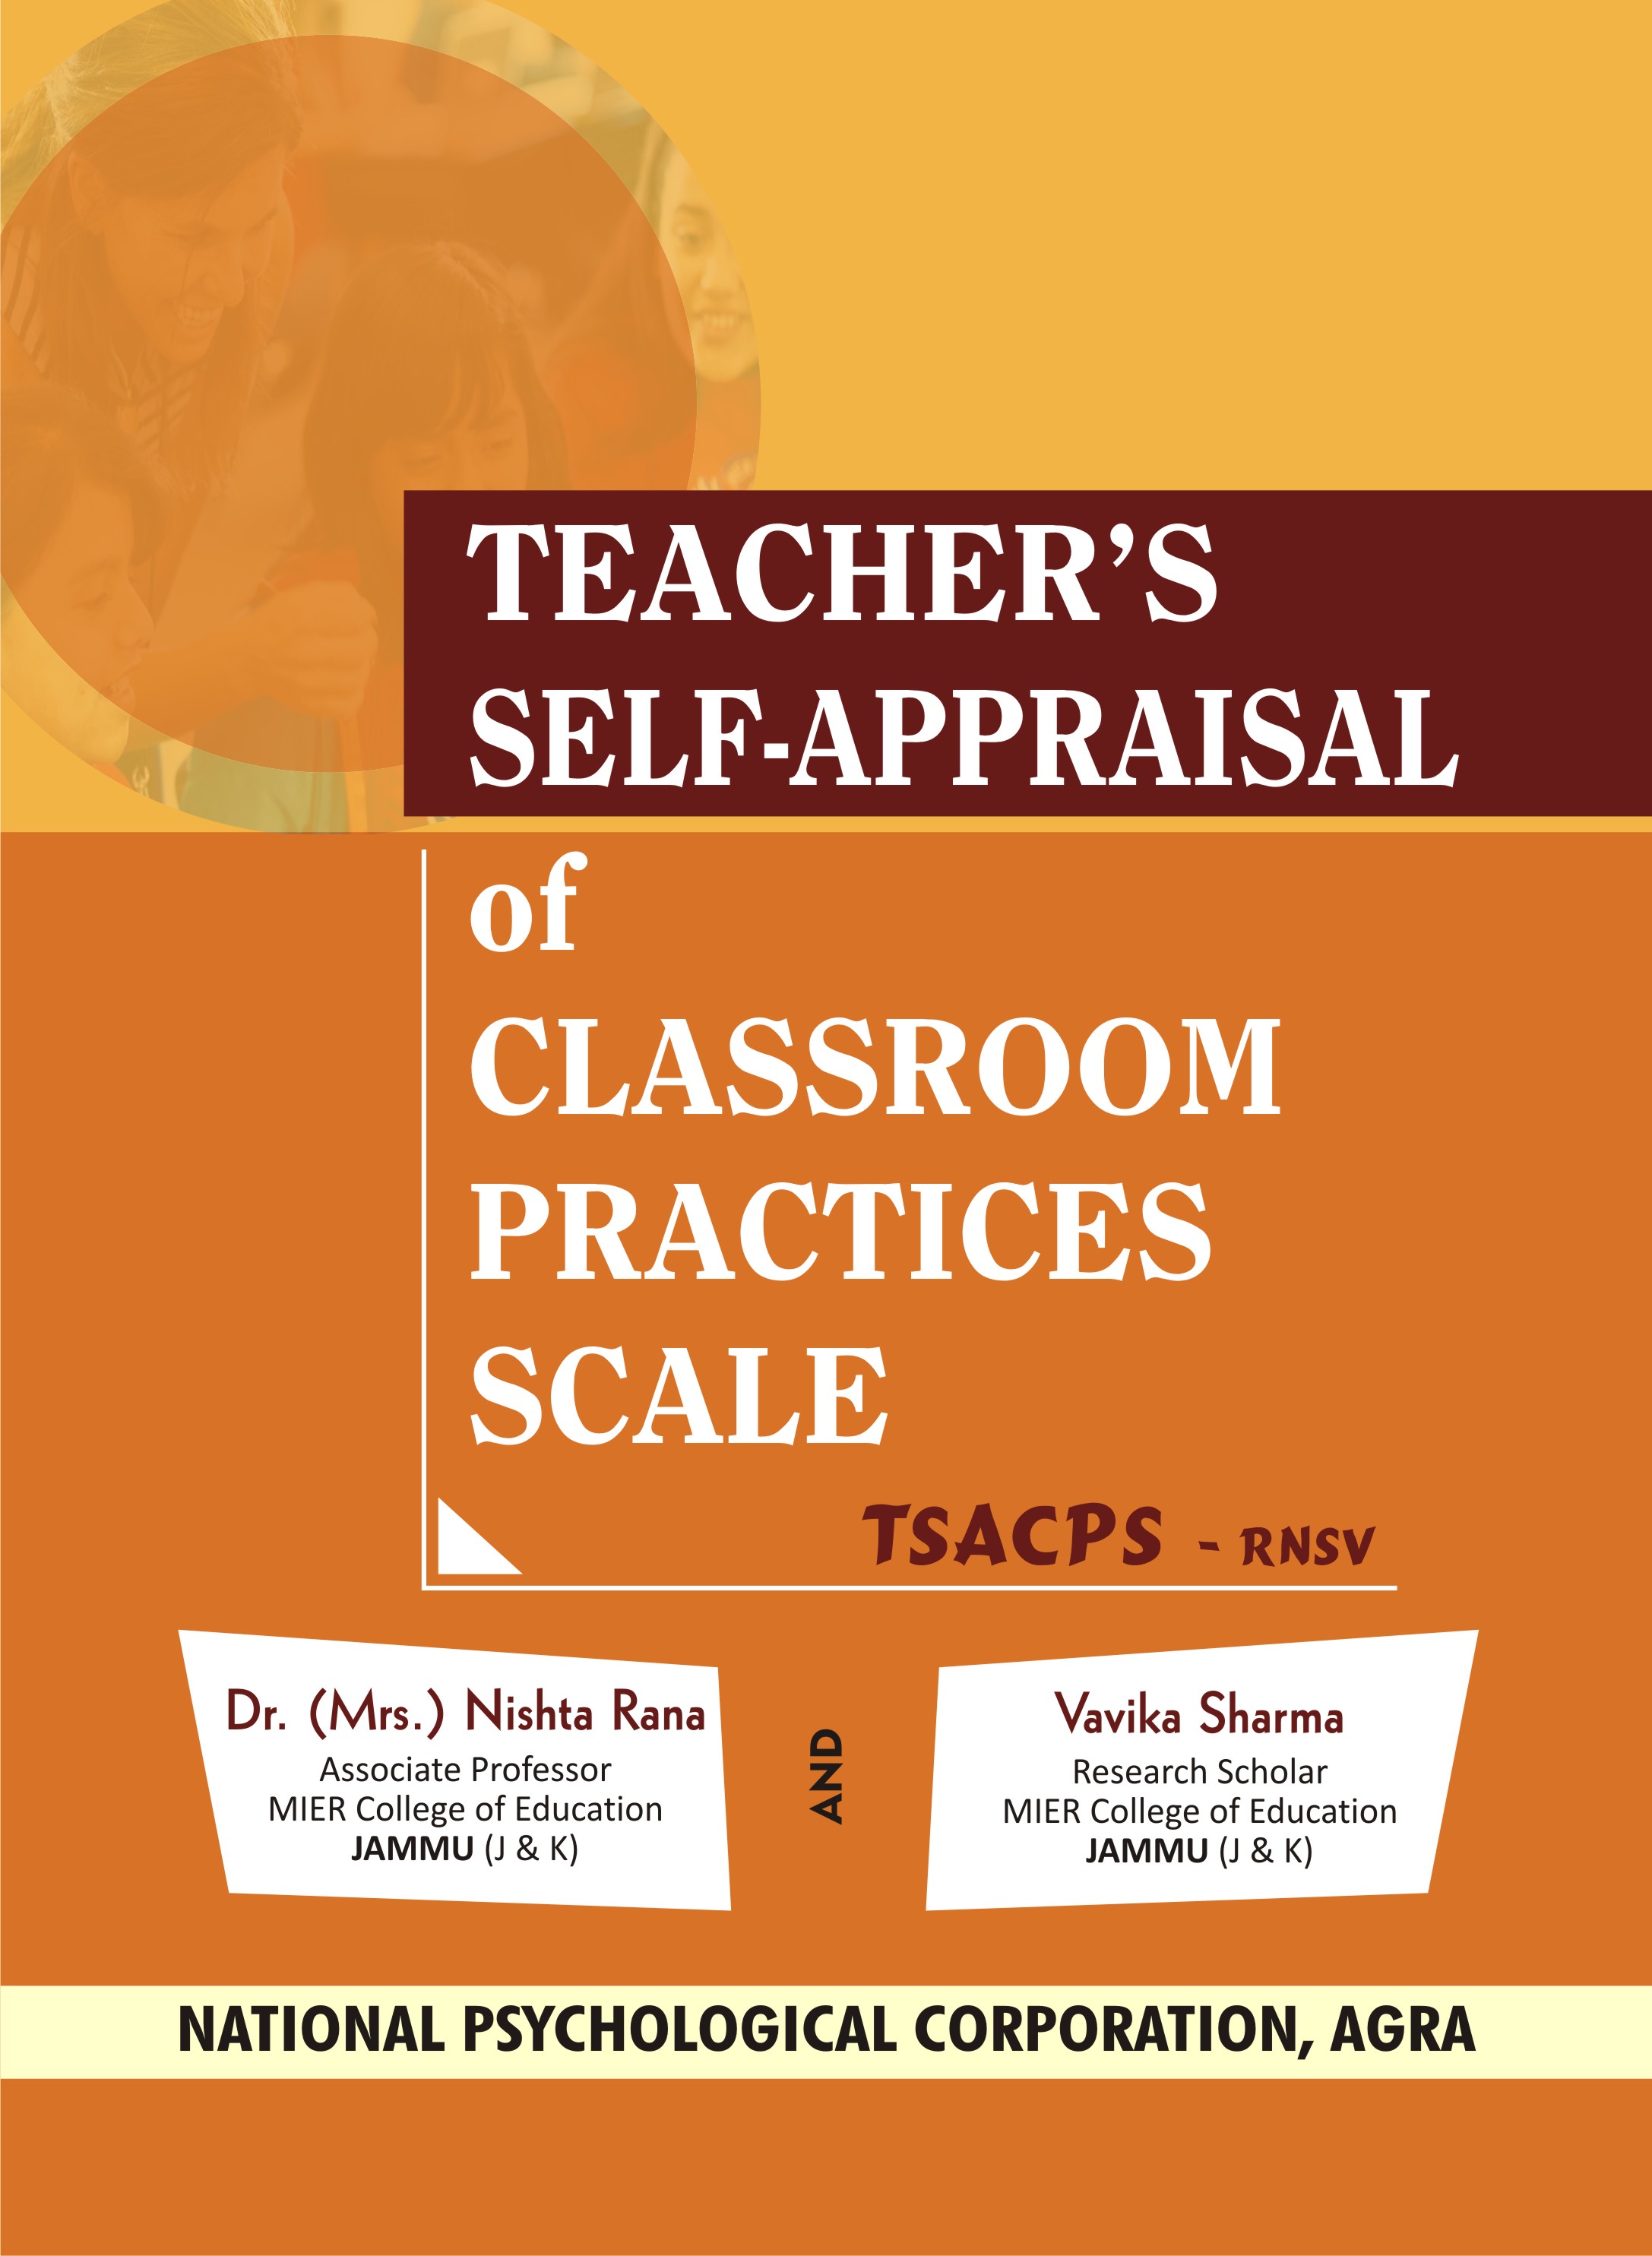 TEACHER-S-SELF-APPRAISAL-OF-CLASSROOM-PRACTICES-SCALE